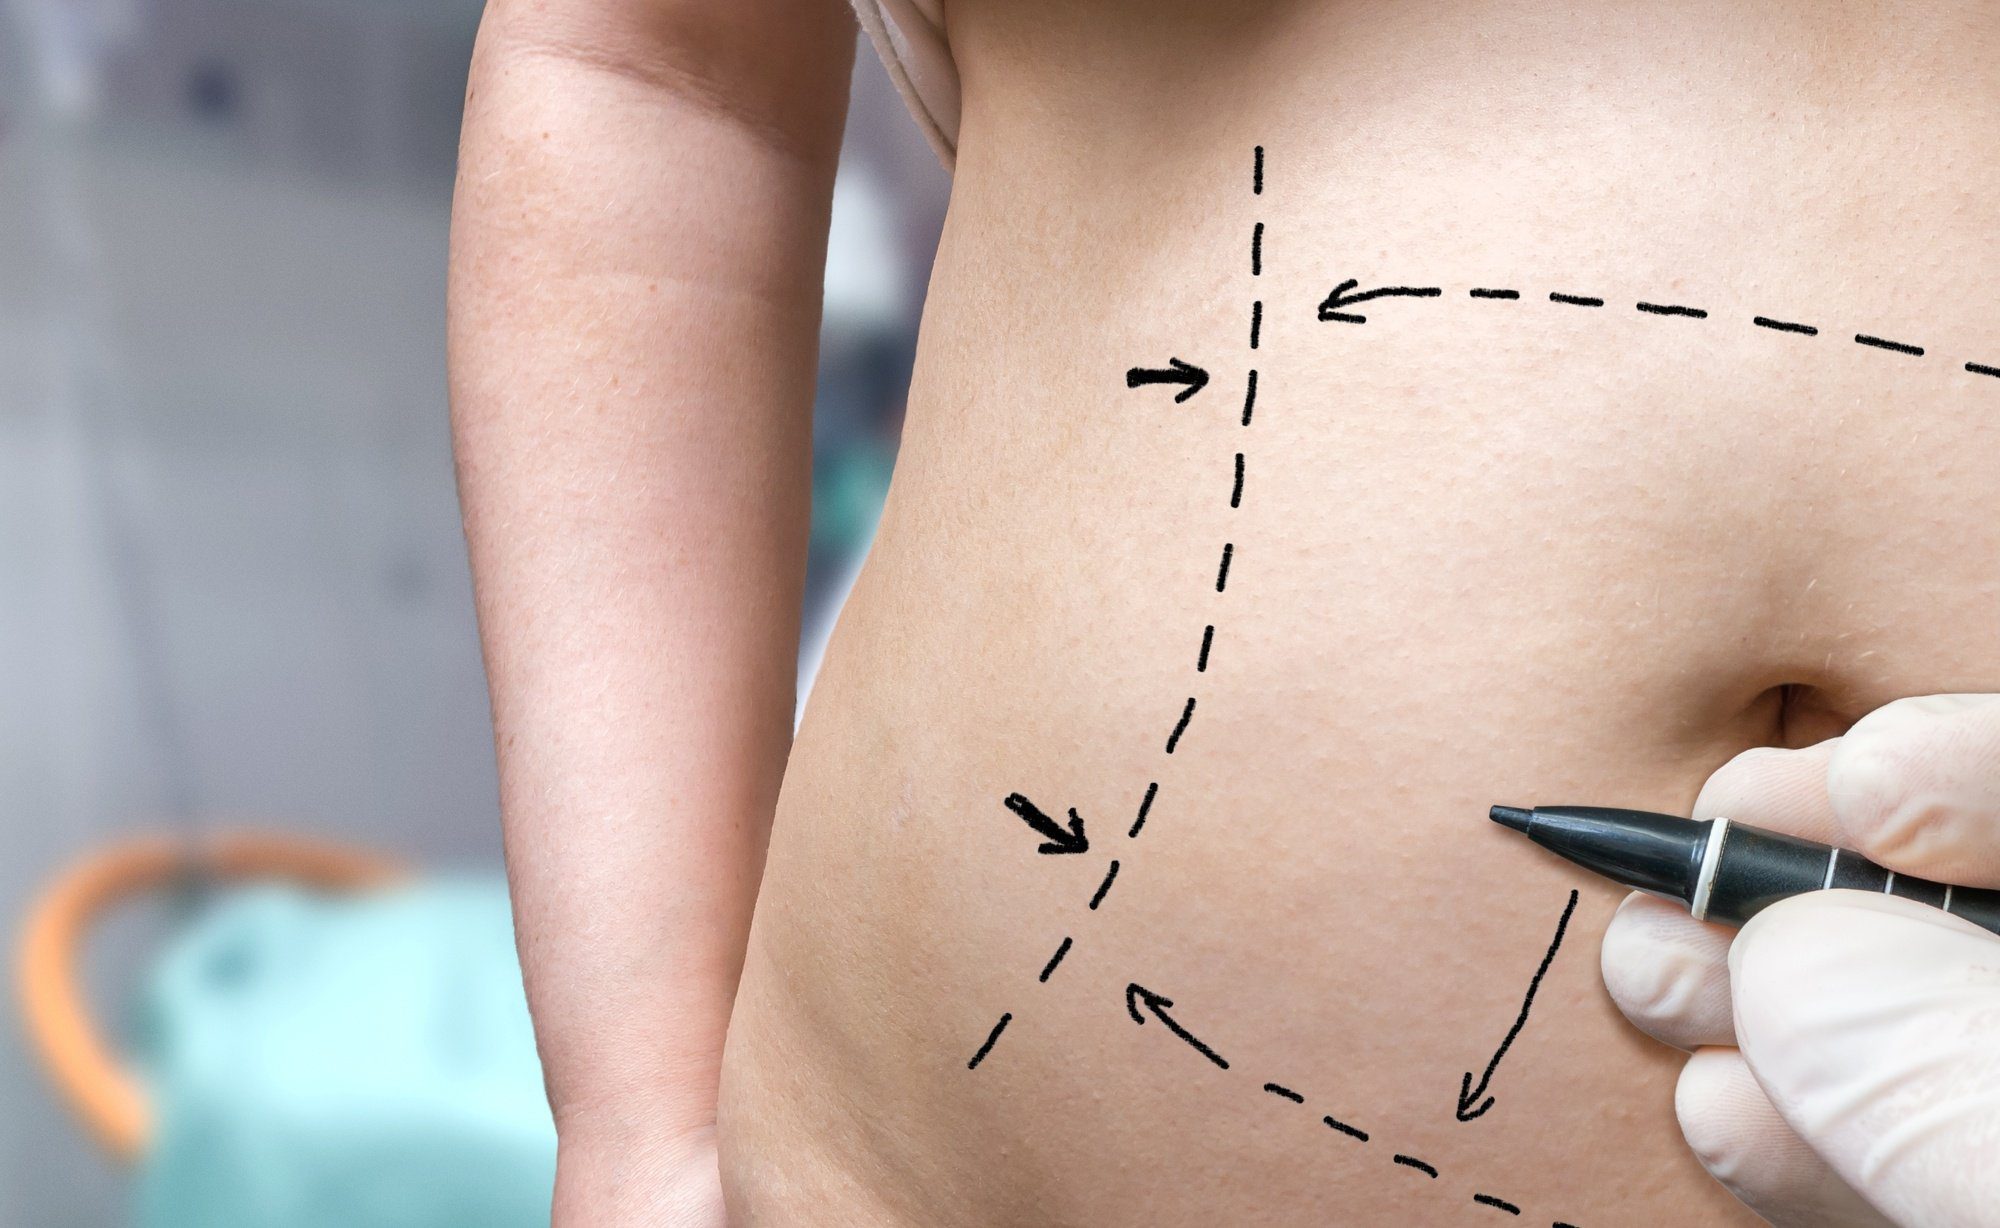 Tummy Tucks Can Potentially Do More Than Shrink a Waistline